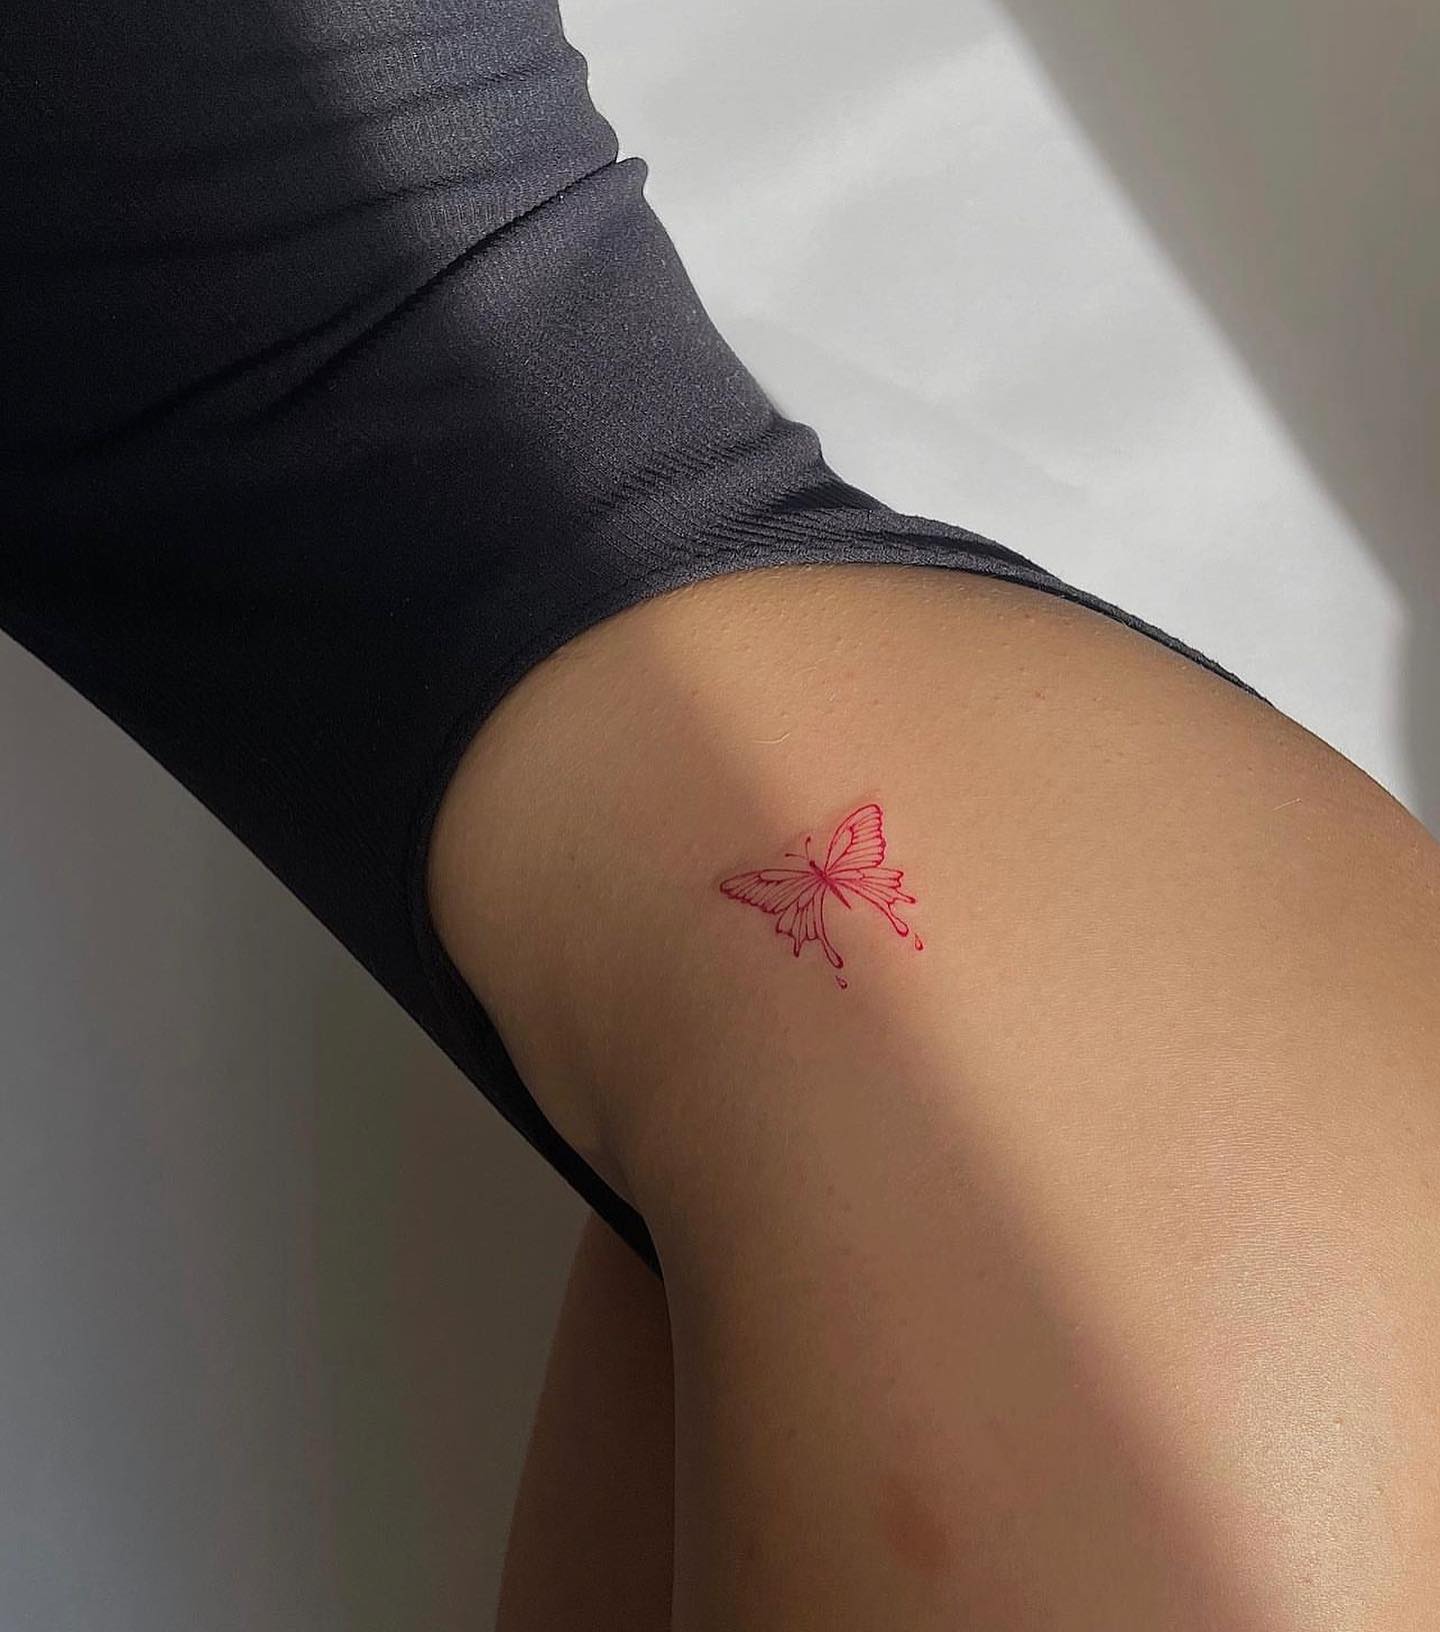 Tatuaje de mariposa roja.